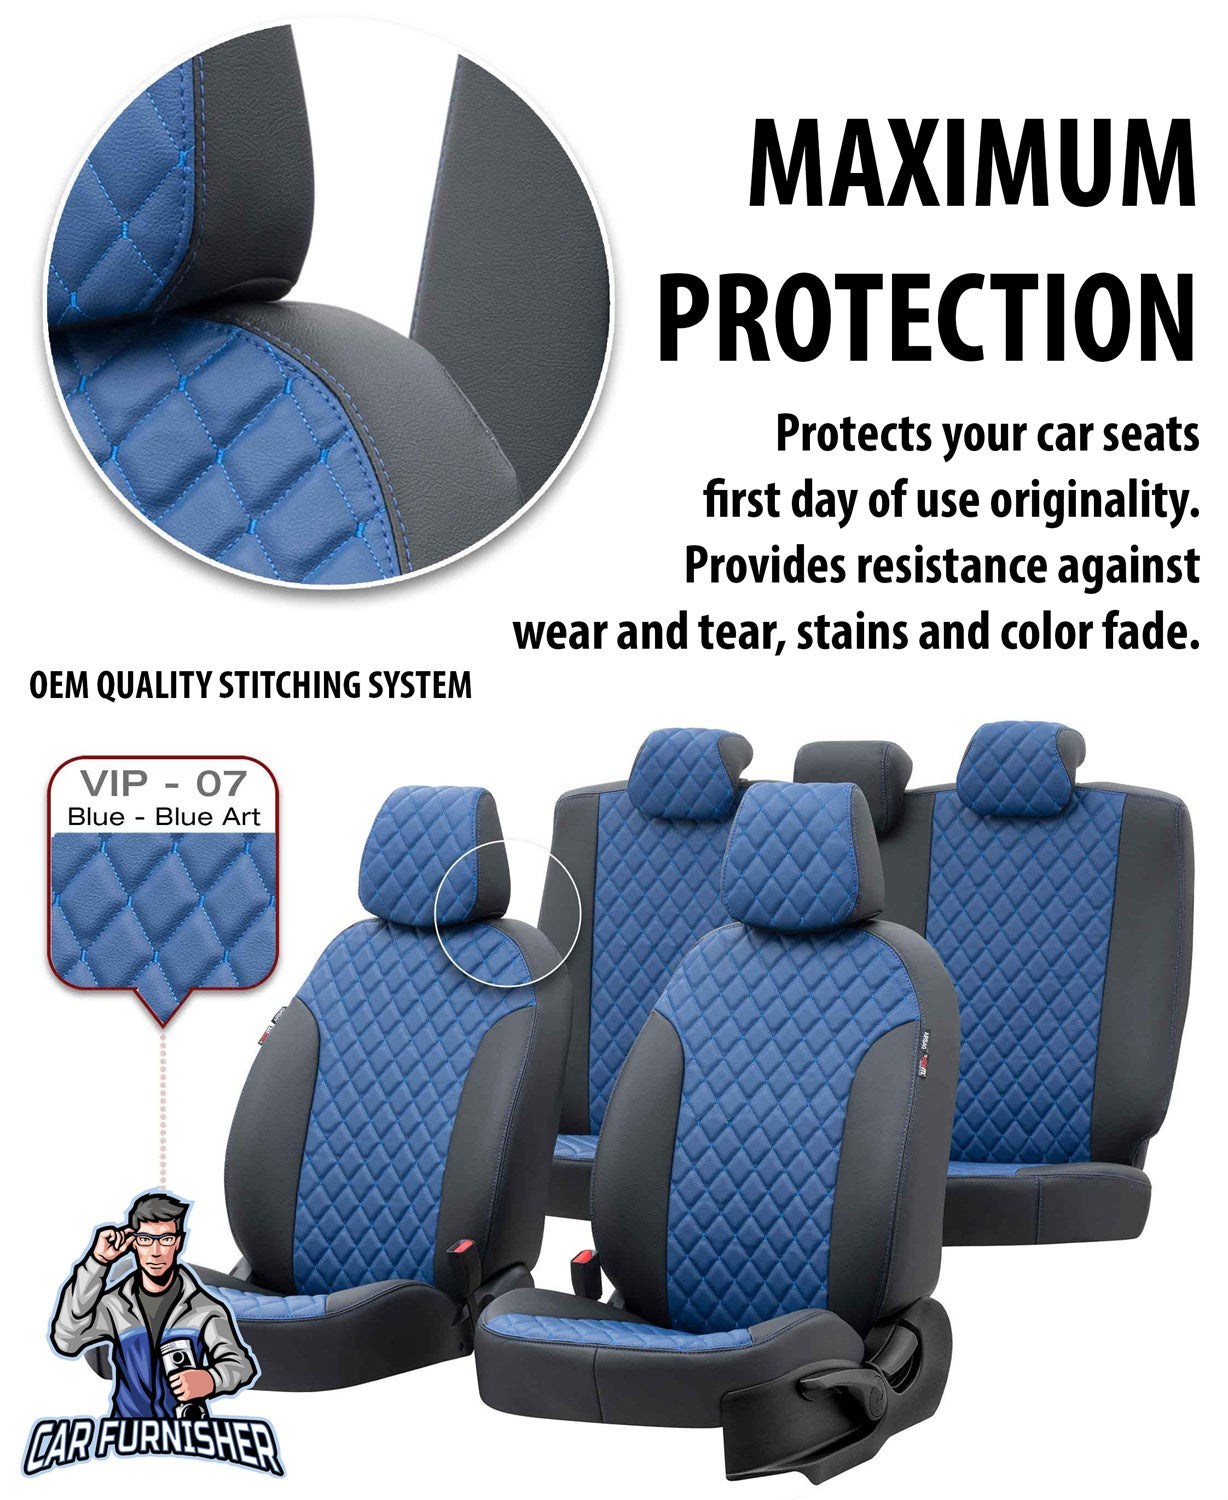 Tata Xenon Seat Covers Madrid Leather Design Smoked Leather